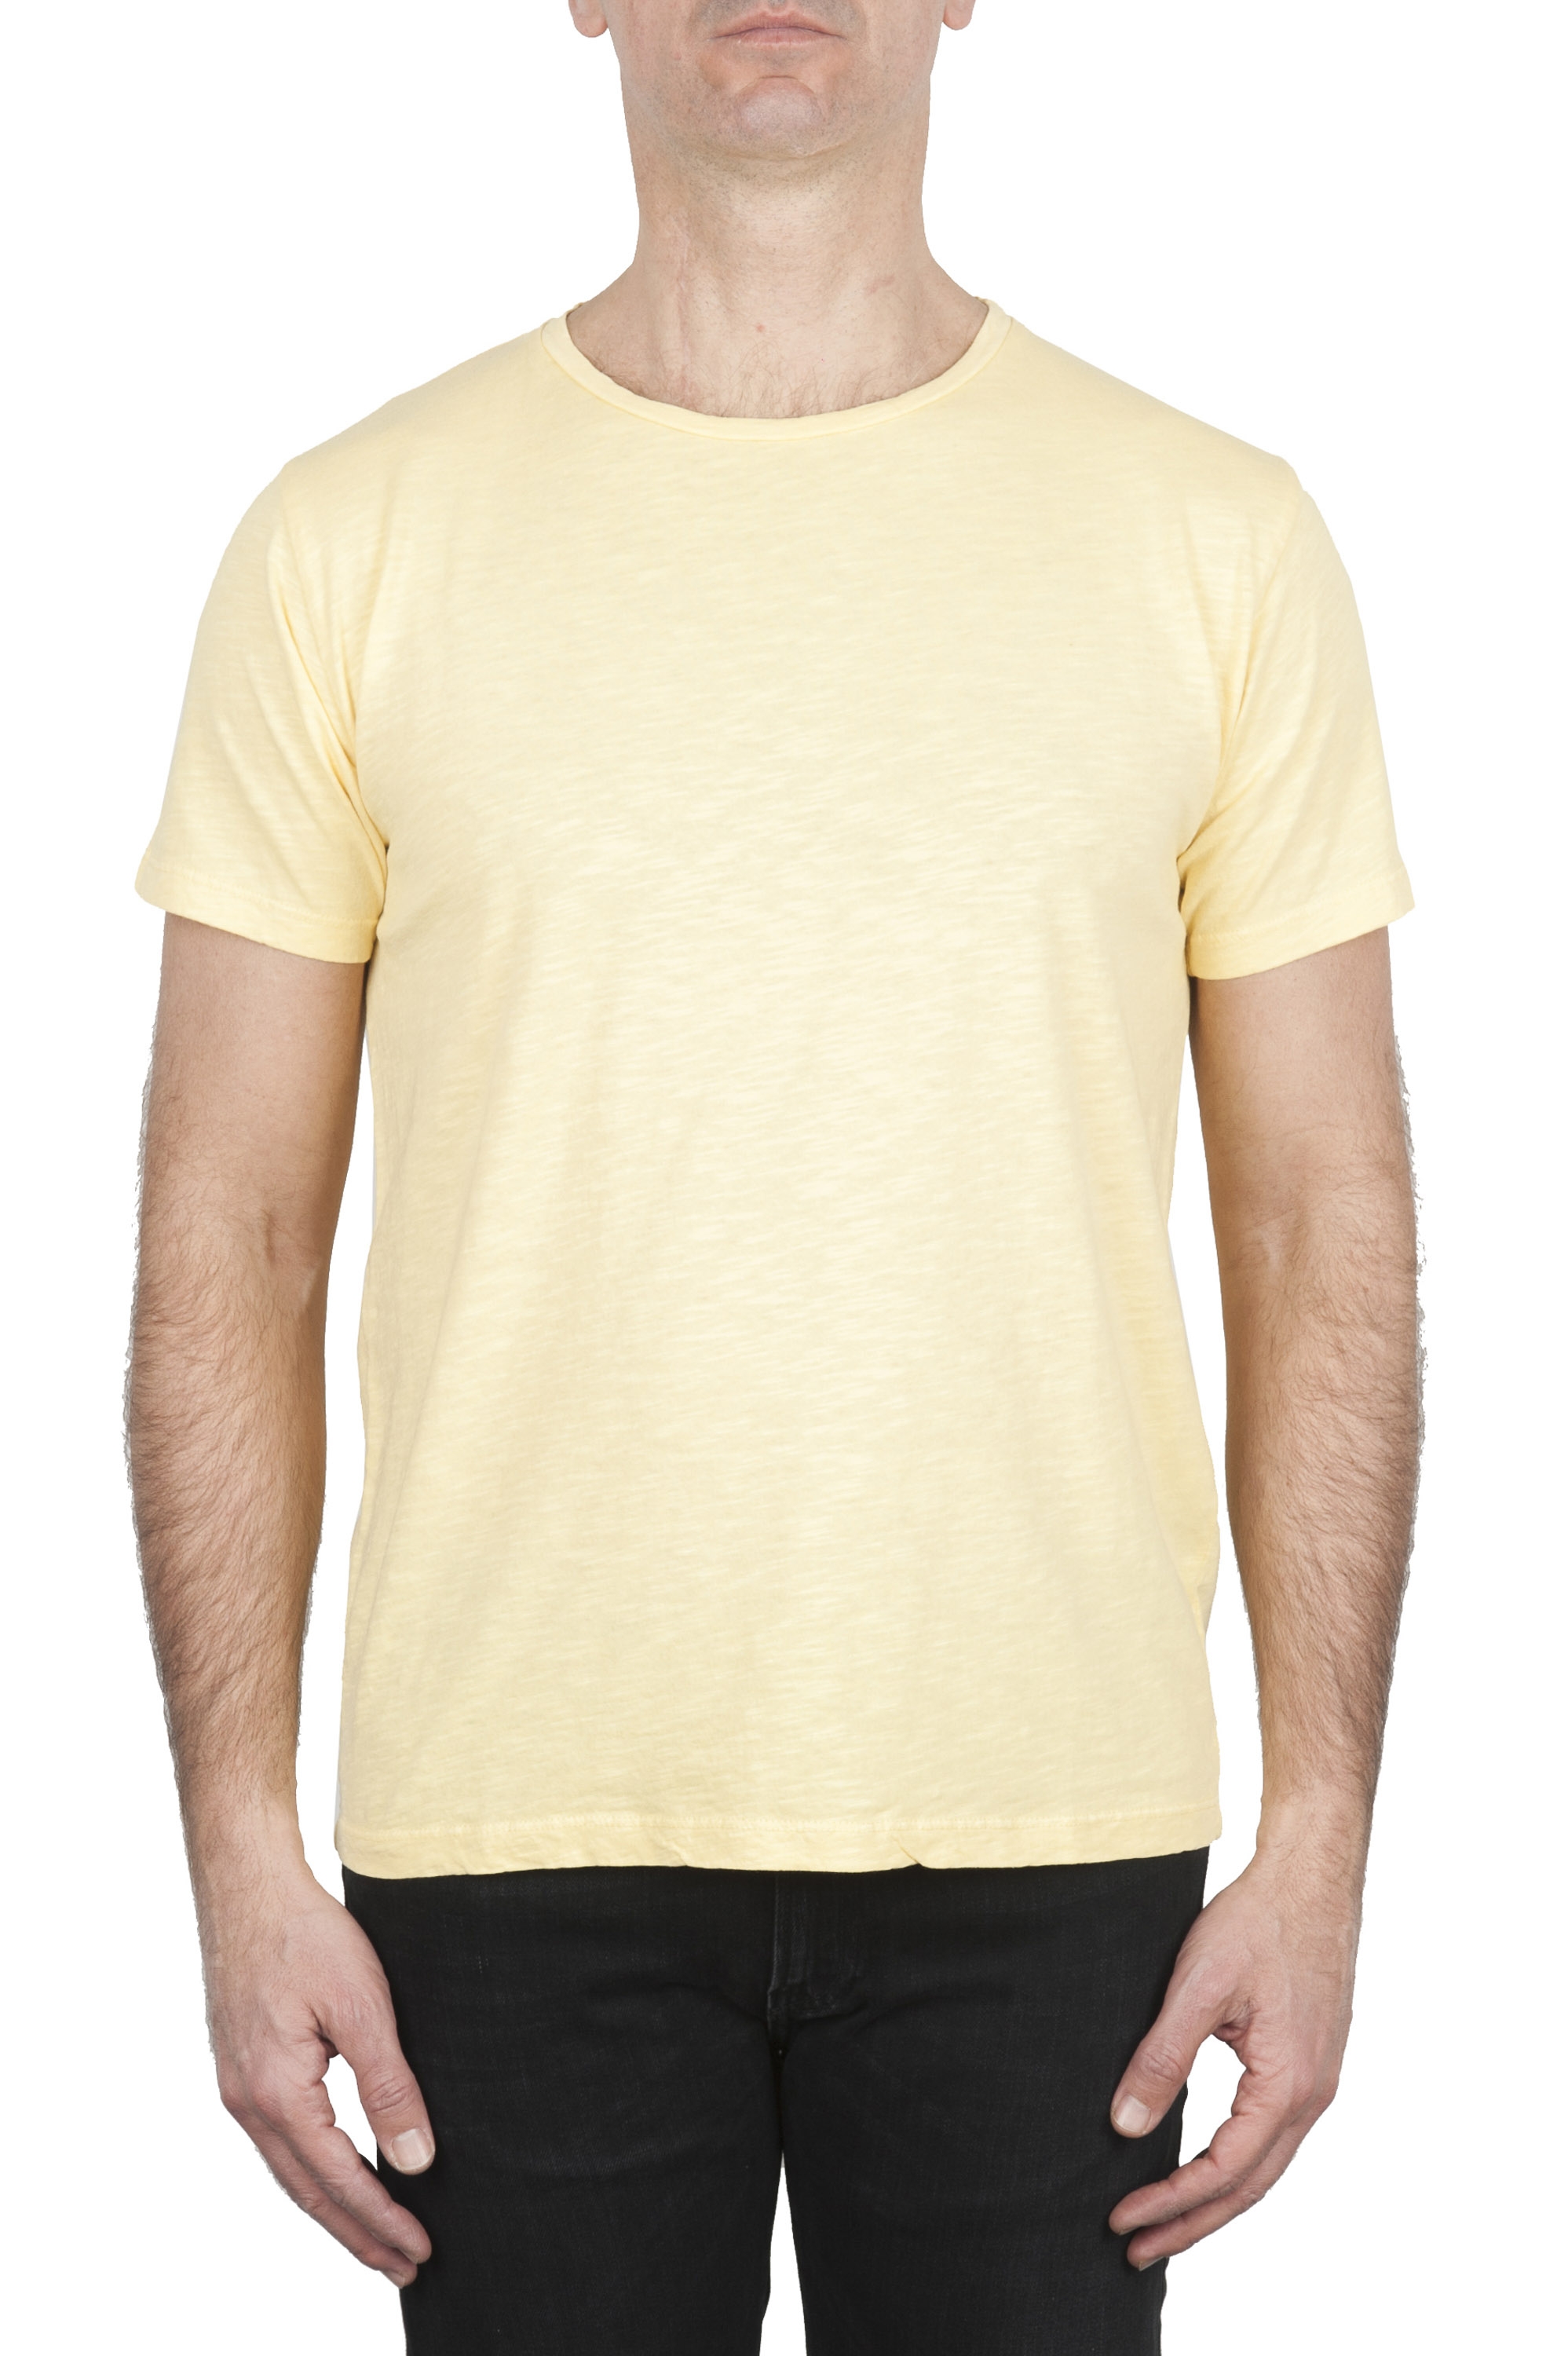 SBU 01973_2020SS Flamed cotton scoop neck t-shirt yellow 01